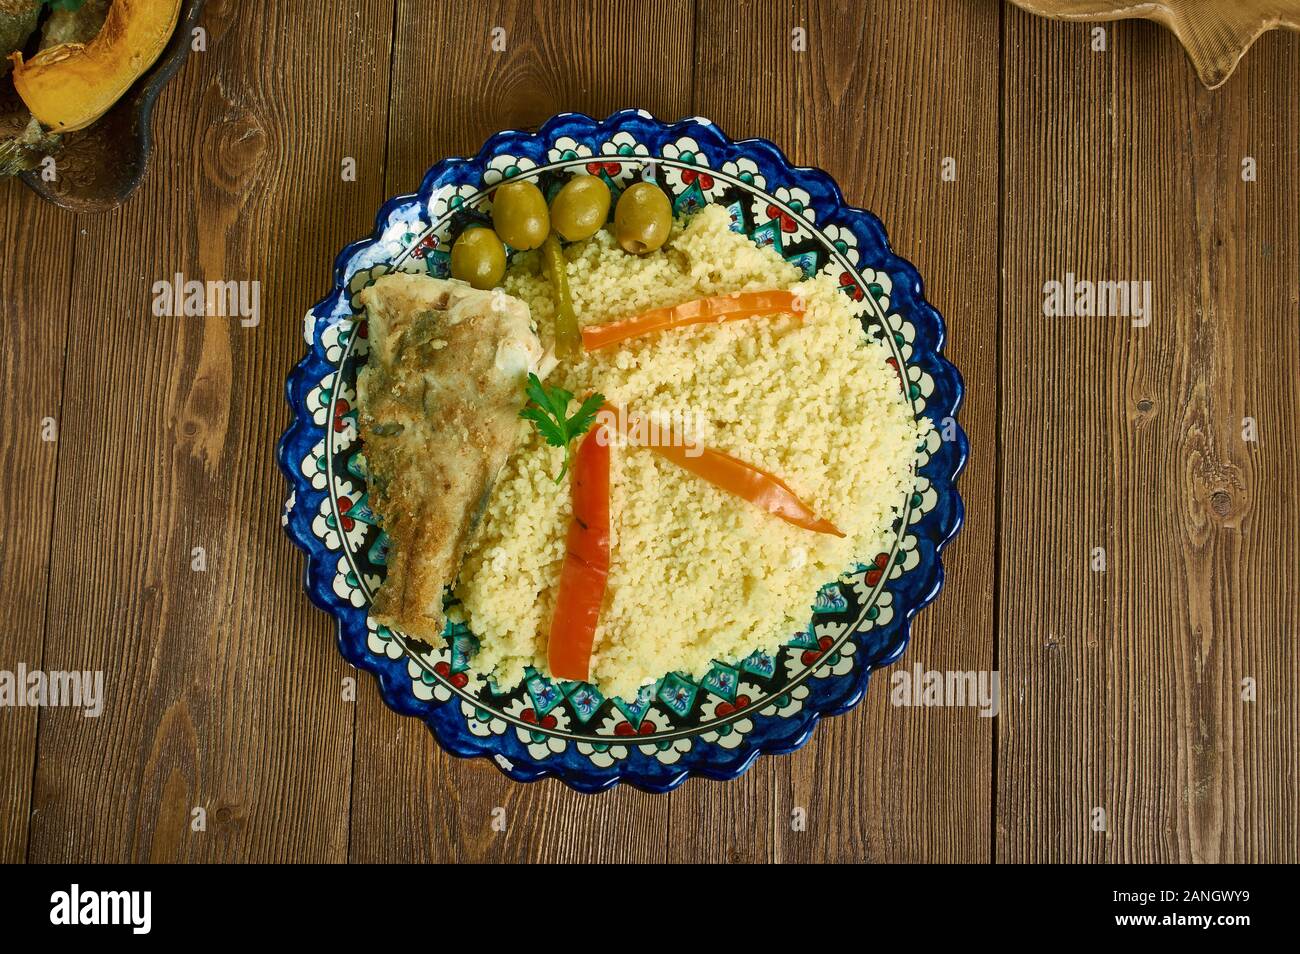 Couscous au merou - Tunisian-Style Couscous with Fish Stock Photo